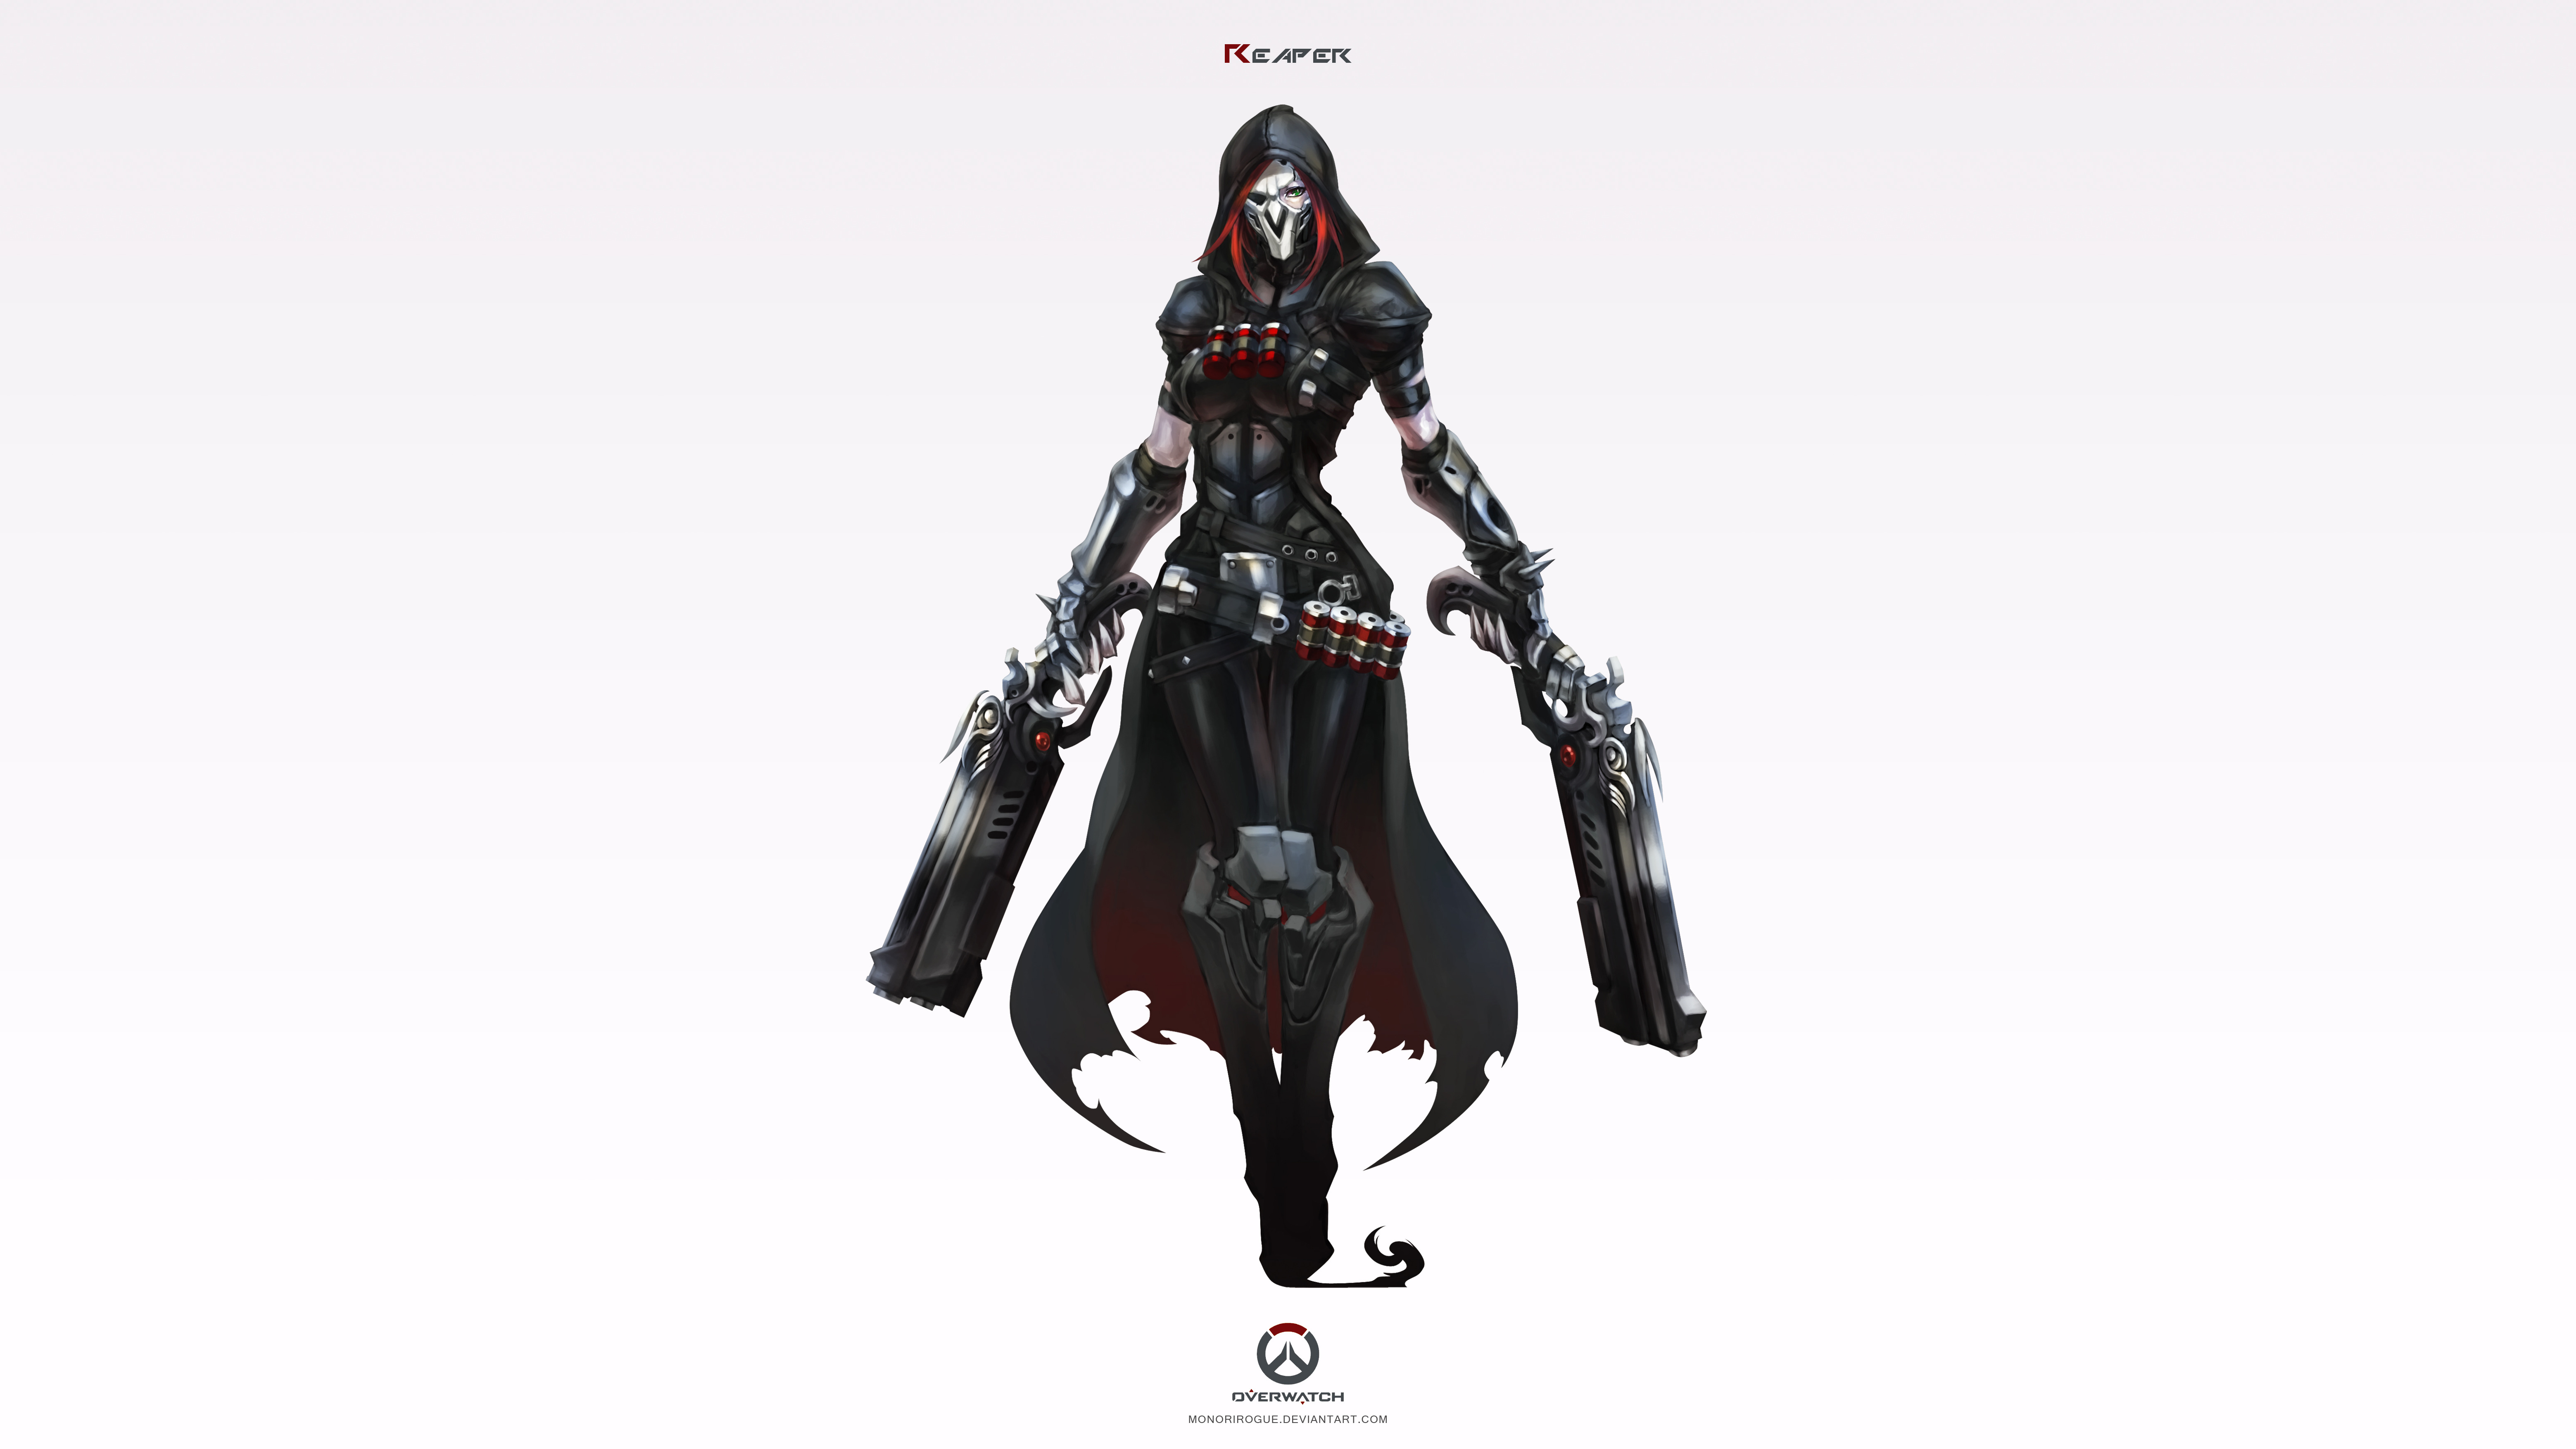 Overwatch, Reaper (Overwatch) Wallpapers HD / Desktop and Mobile Backgrounds